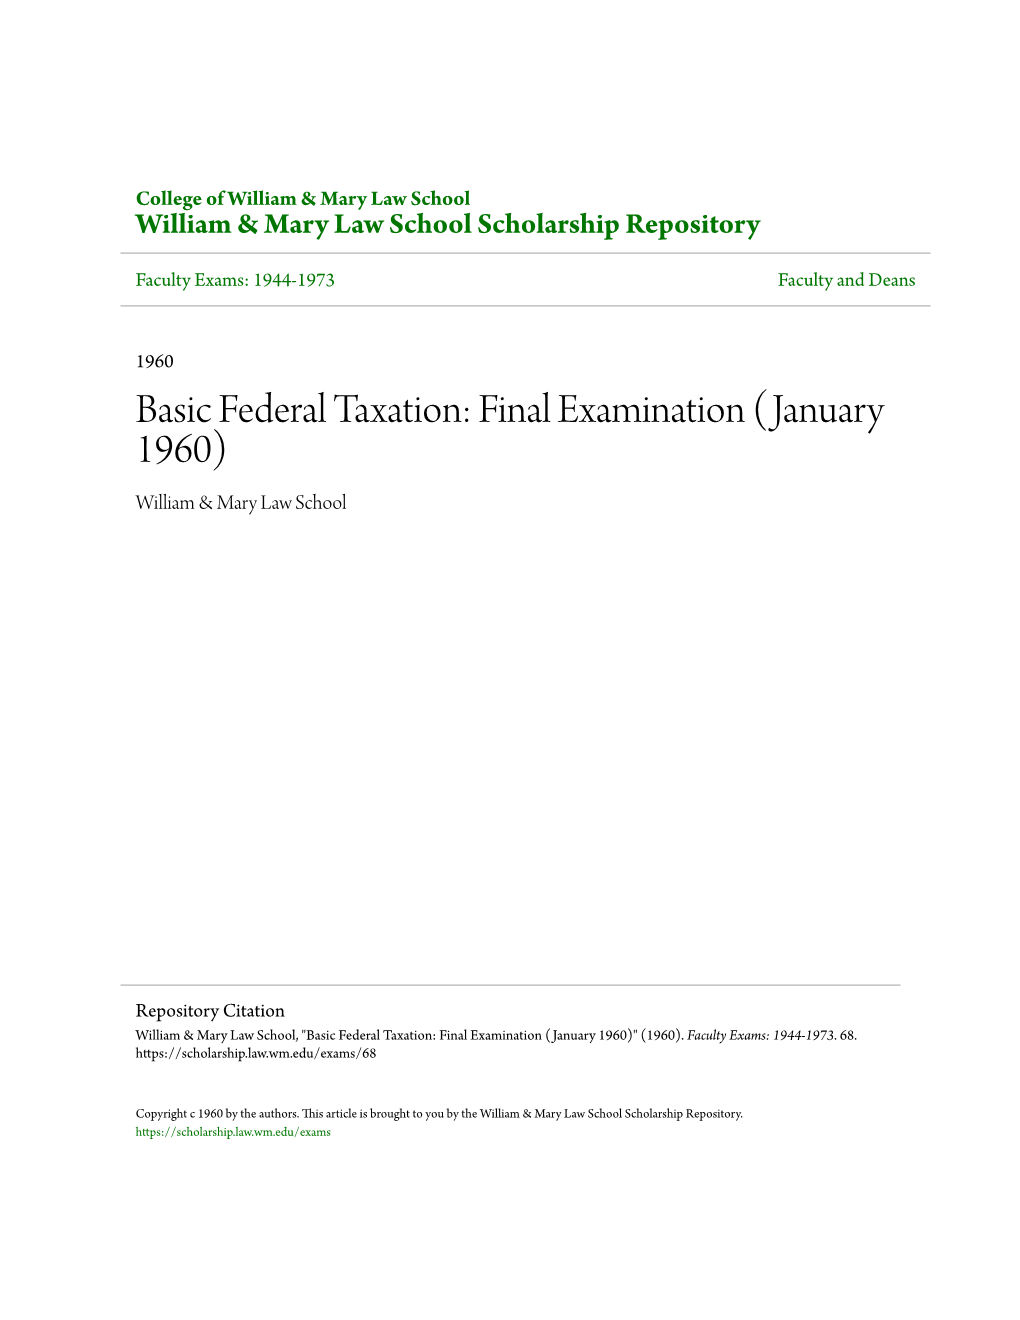 Basic Federal Taxation: Final Examination (January 1960) William & Mary Law School